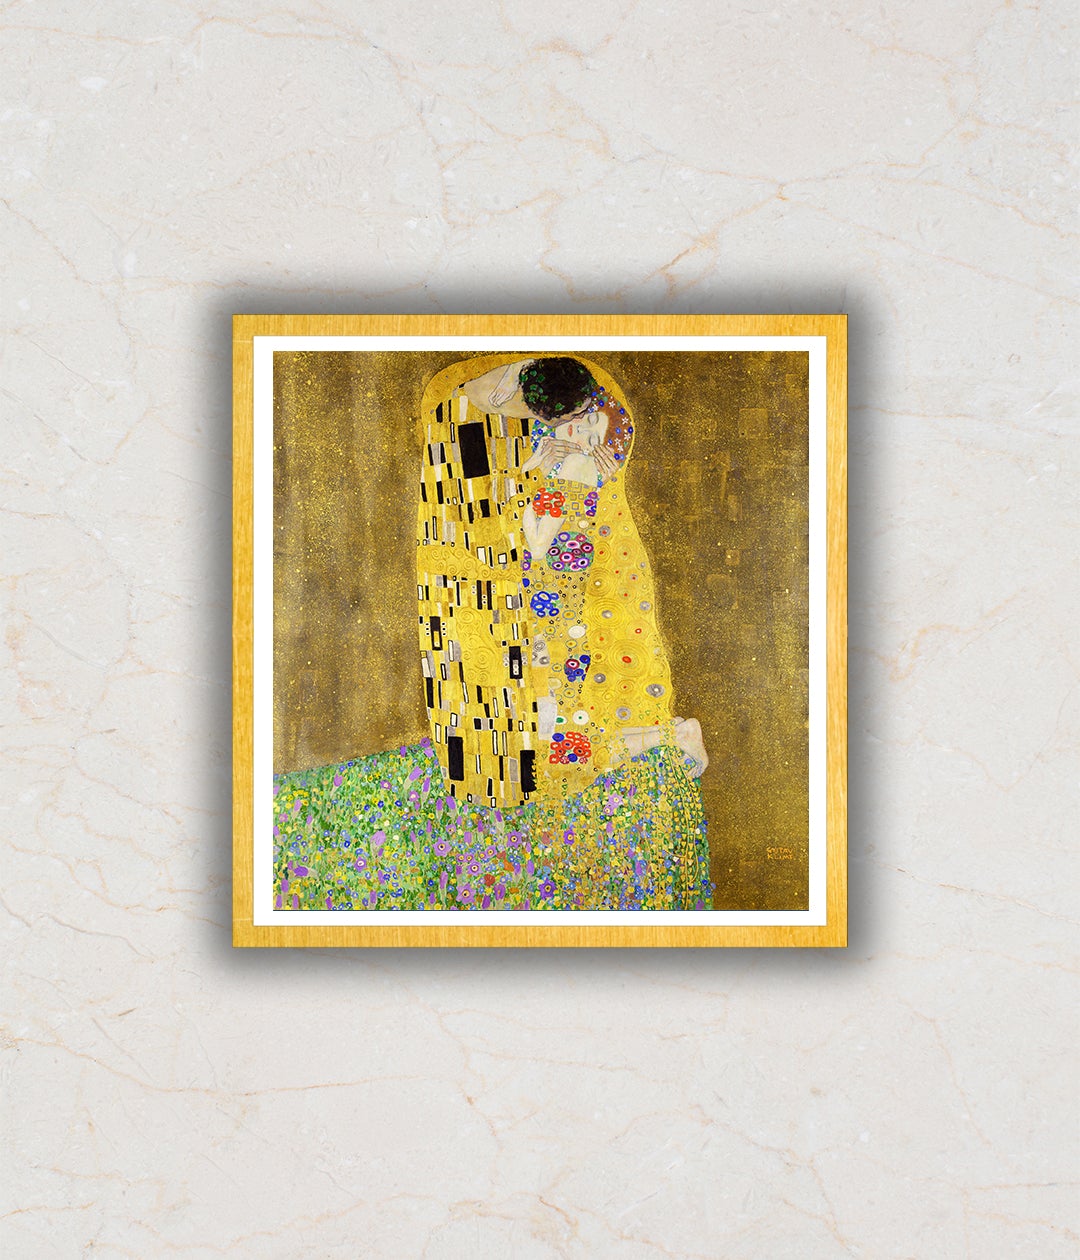 Gustav Klimt 'The Kiss' Modern Abstract Painting Artwork For Home Wall DŽcor